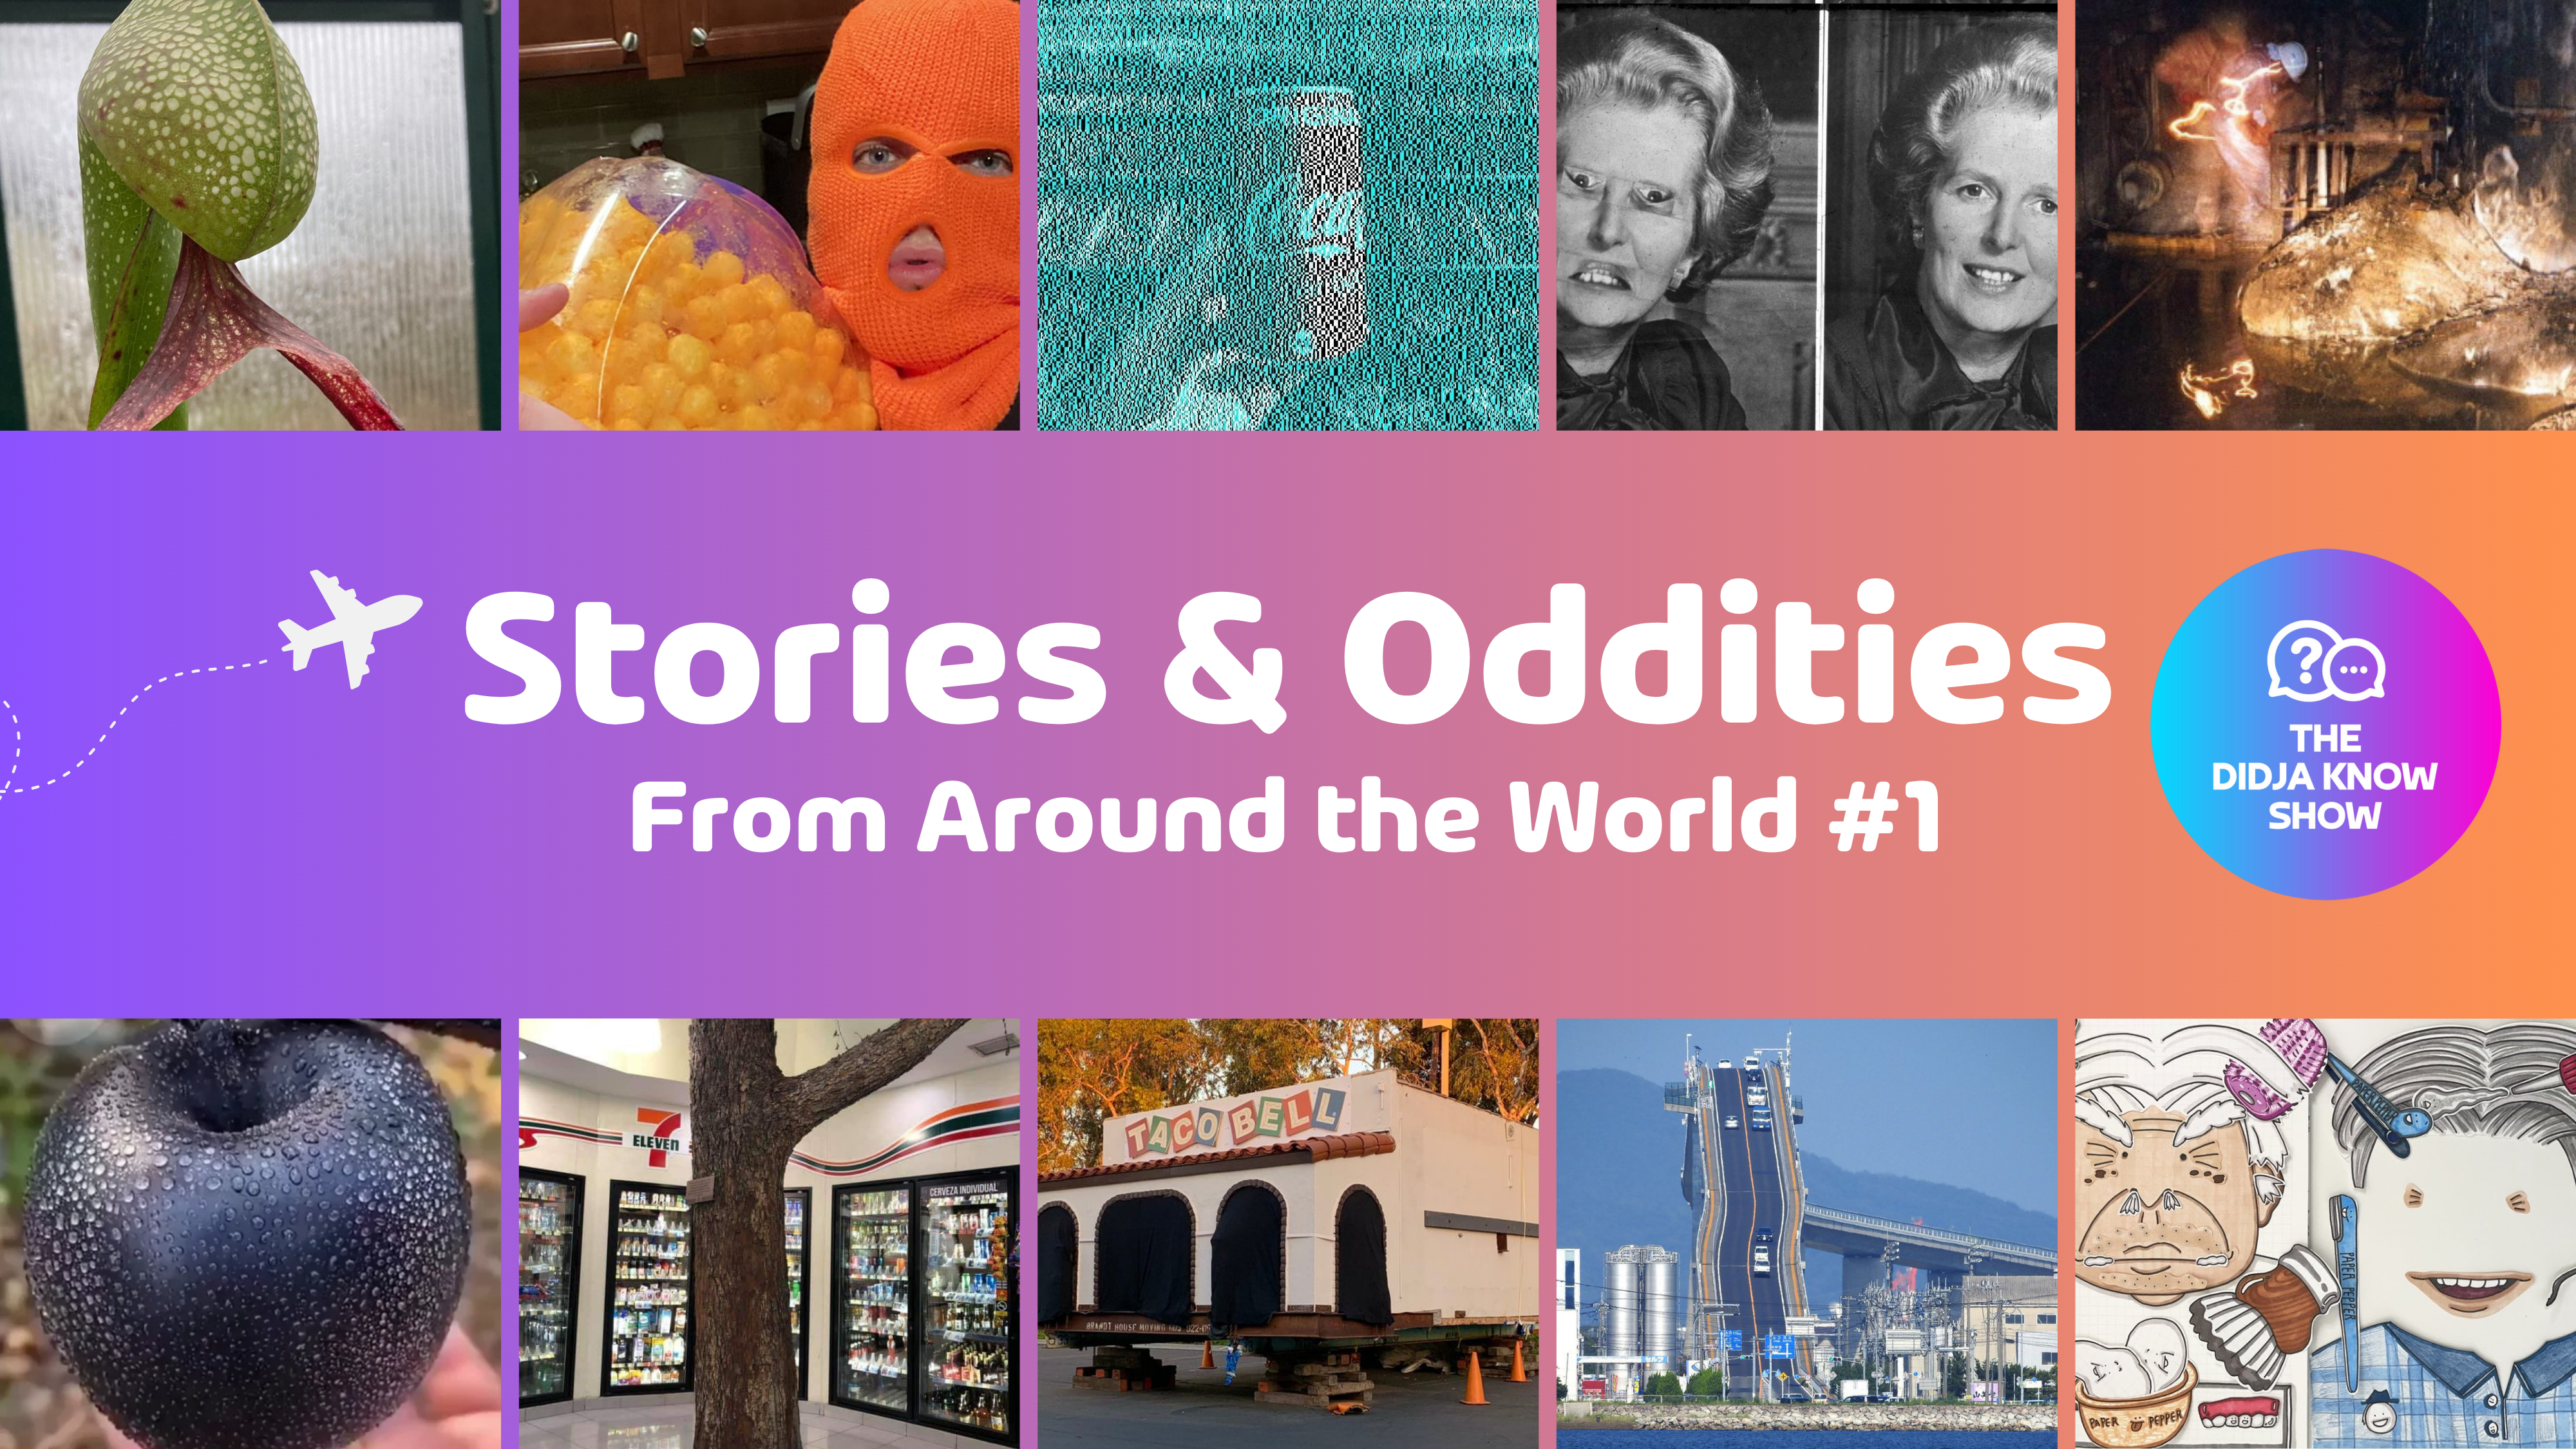 Stories & Oddities From Around the World #1